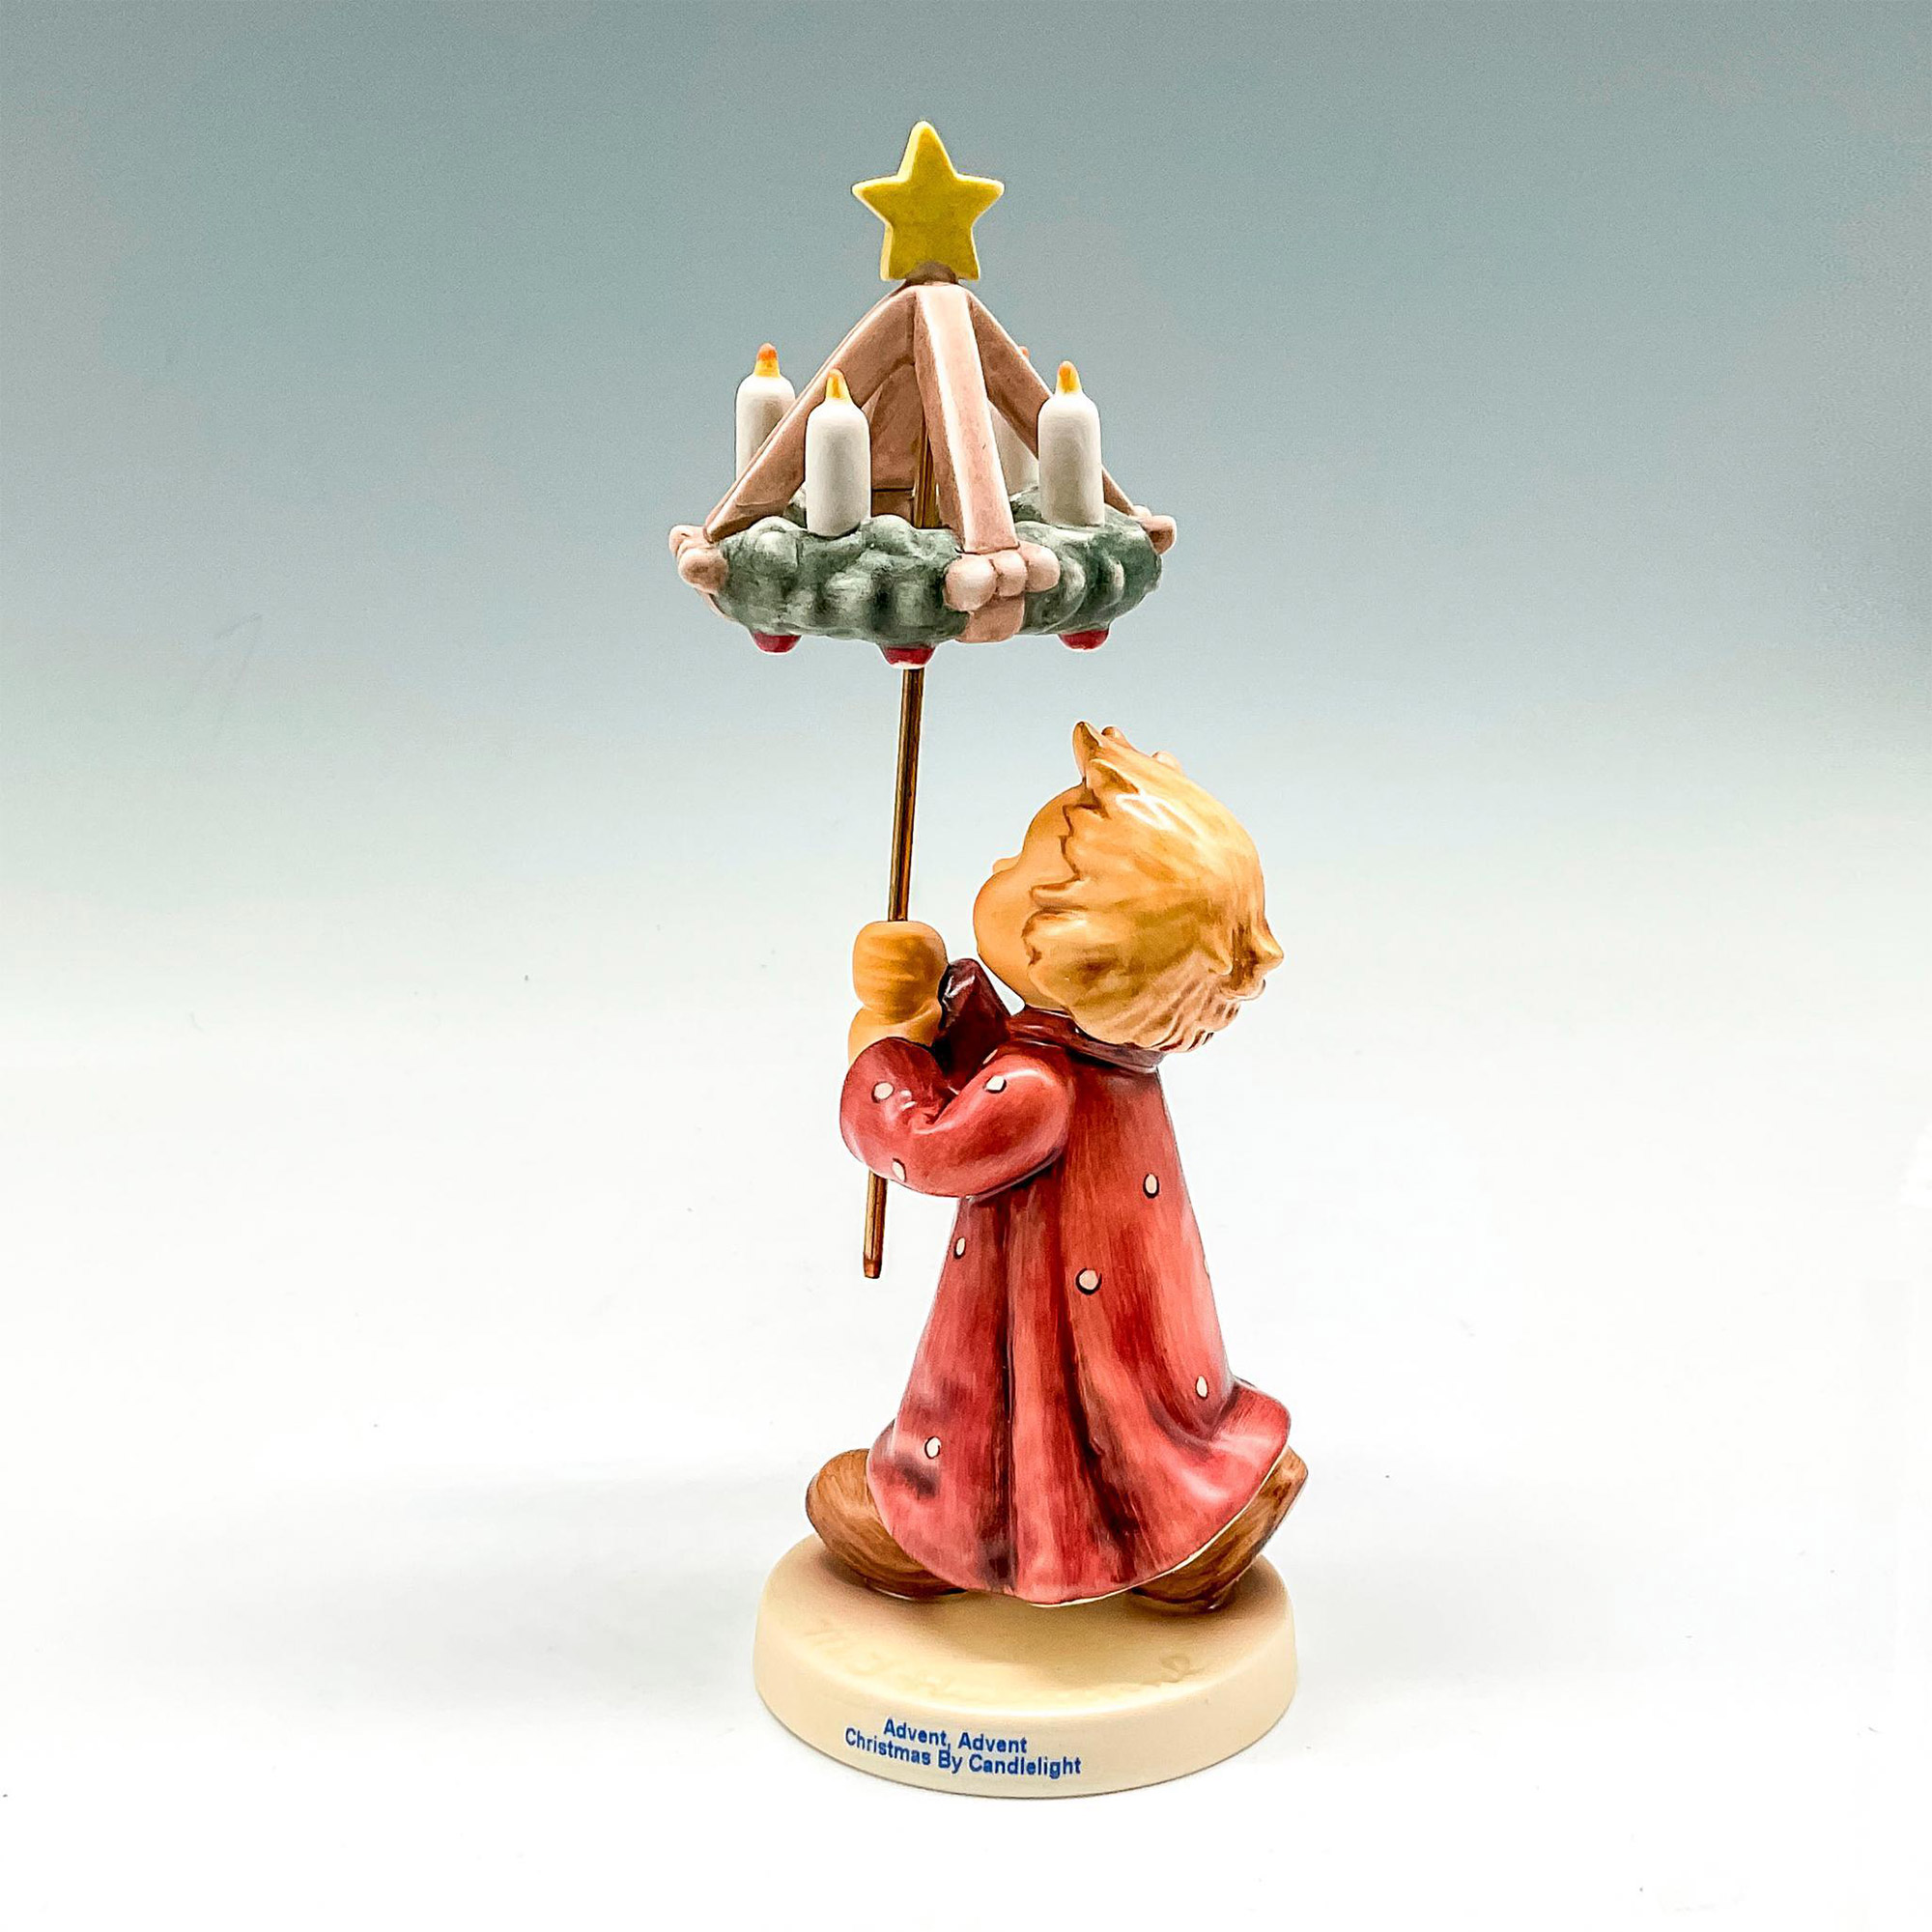 Goebel Hummel Porcelain Figurine, Christmas by Candlelight - Image 3 of 4